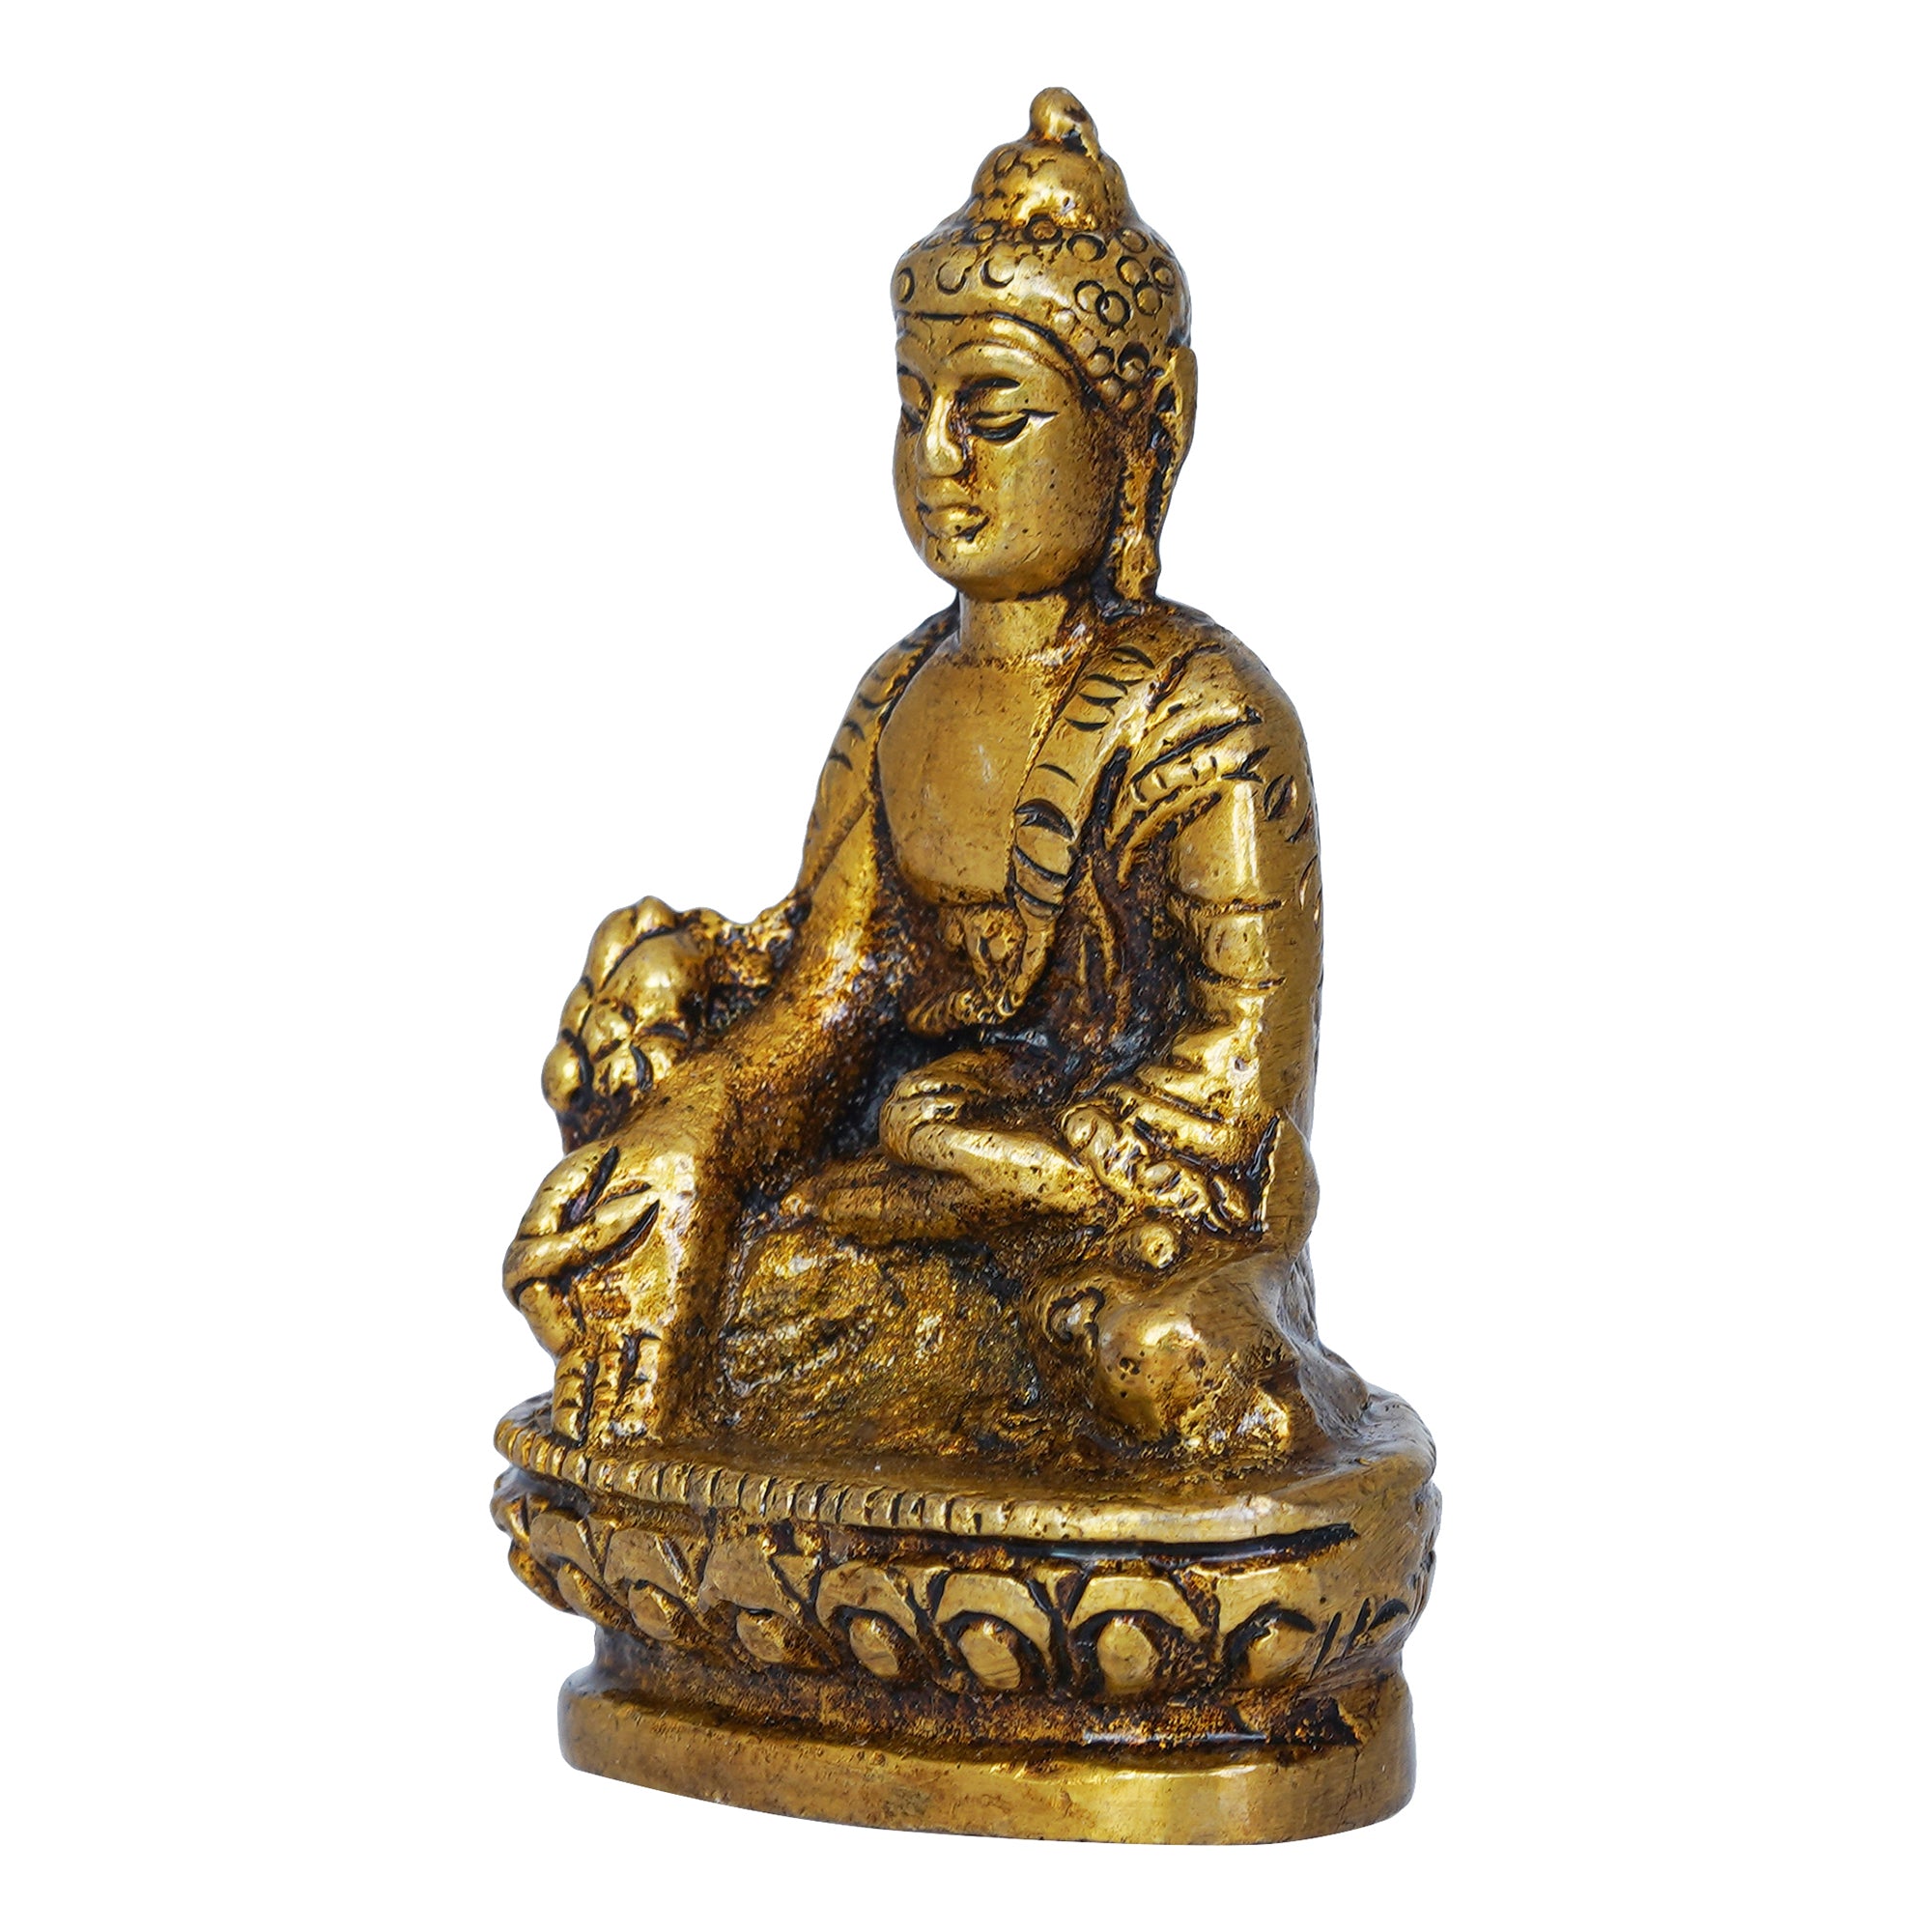 Golden Brass Lord Buddha Statue Murti Idol for Home Decor, Living Room, Office Desk, Car Dashboard - Buddha Purnima Gift to Bring Good Luck 6